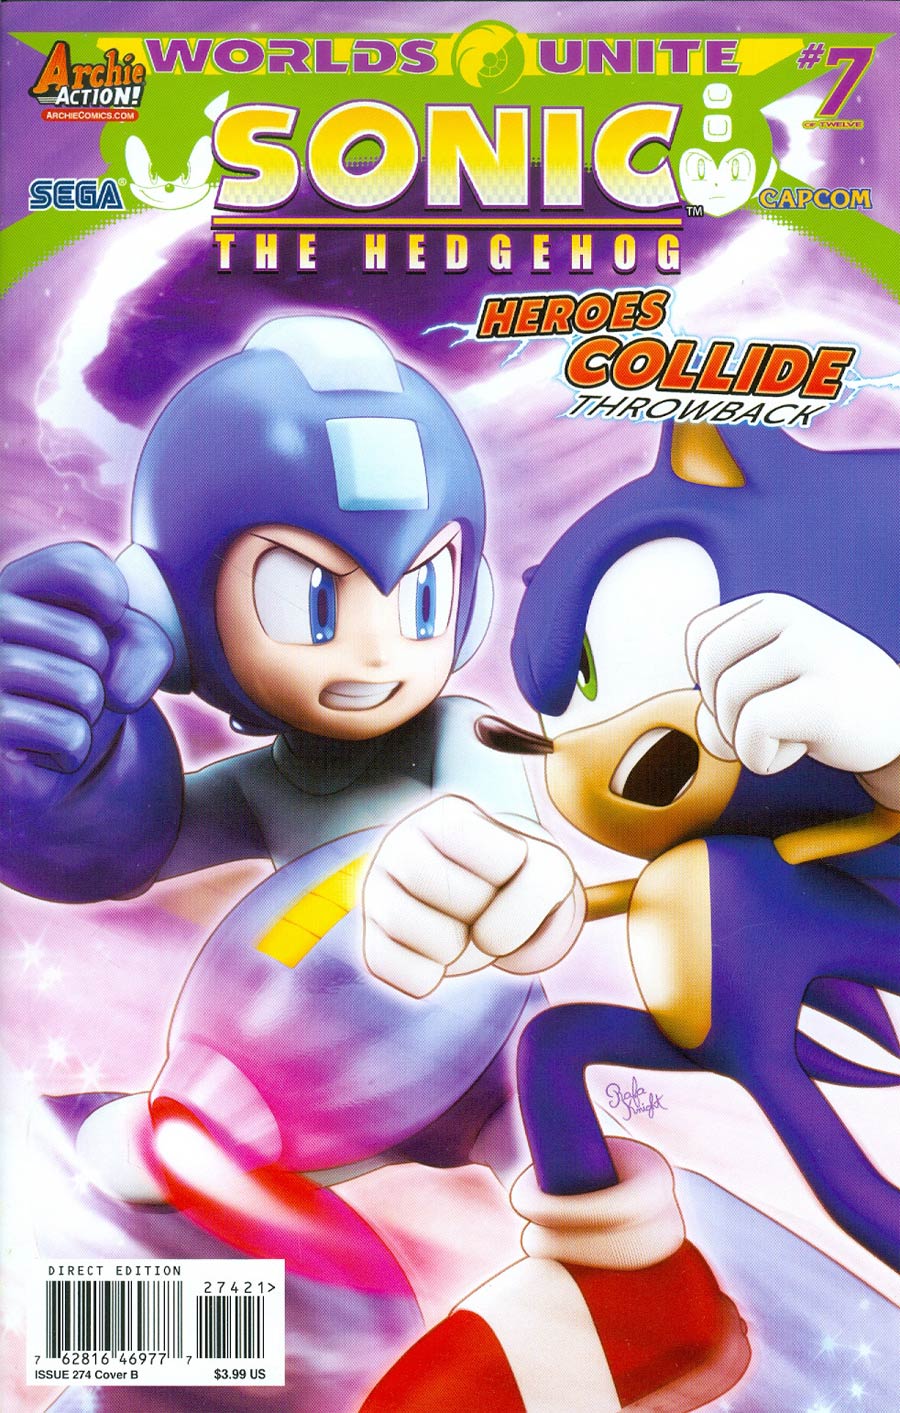 Sonic The Hedgehog Vol 2 #274 Cover B Variant CG Slugfest Cover (Worlds Unite Part 7)